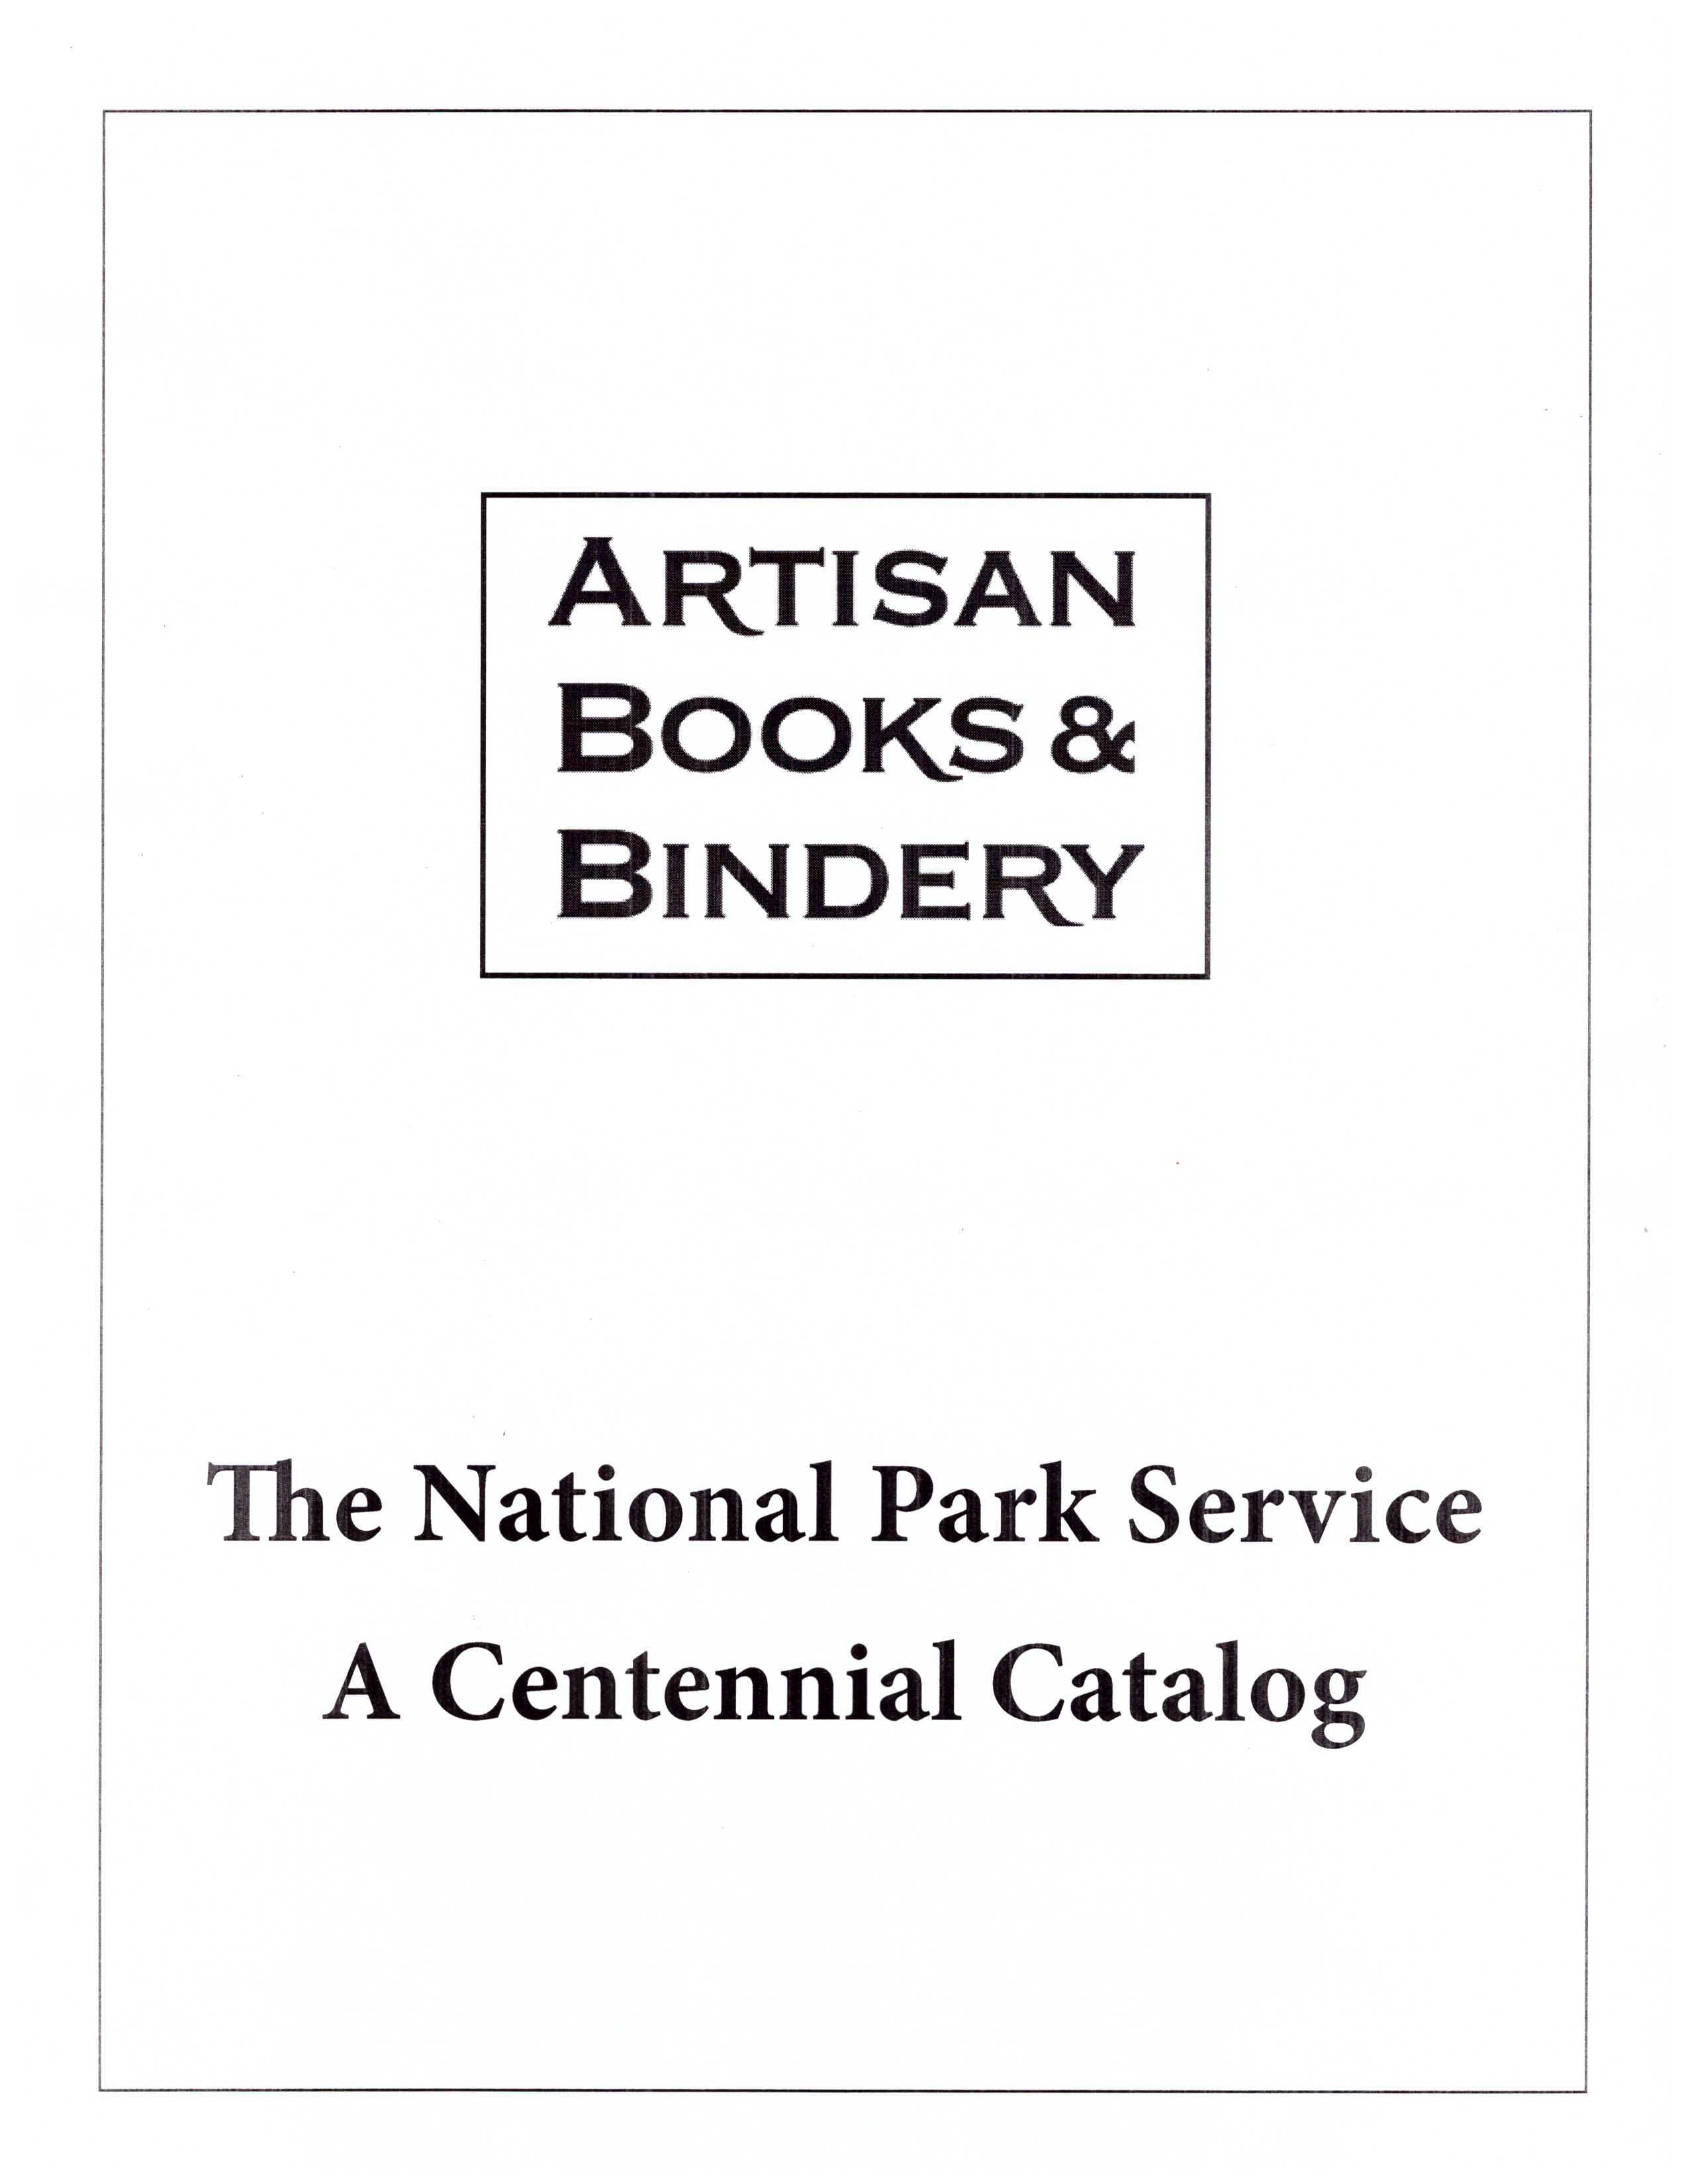 The National Park Service: A Centennial Catalog